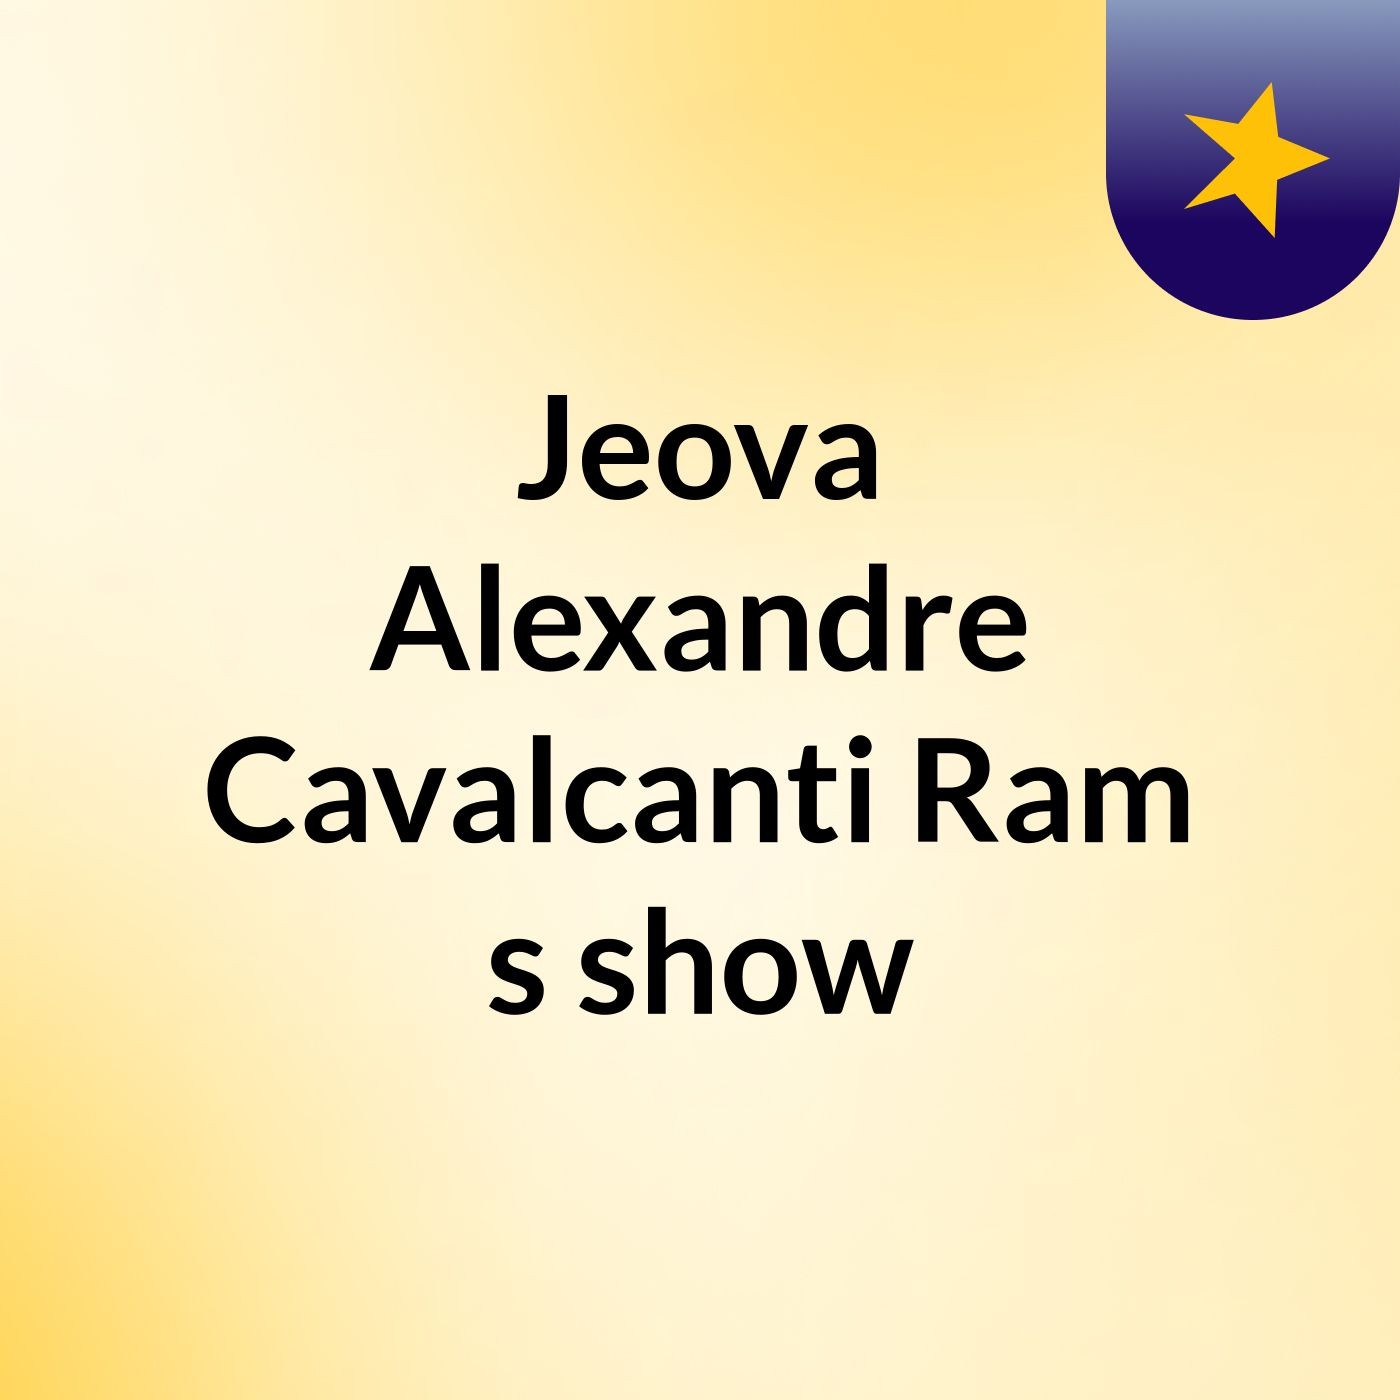 Jeova Alexandre Cavalcanti Ram's show